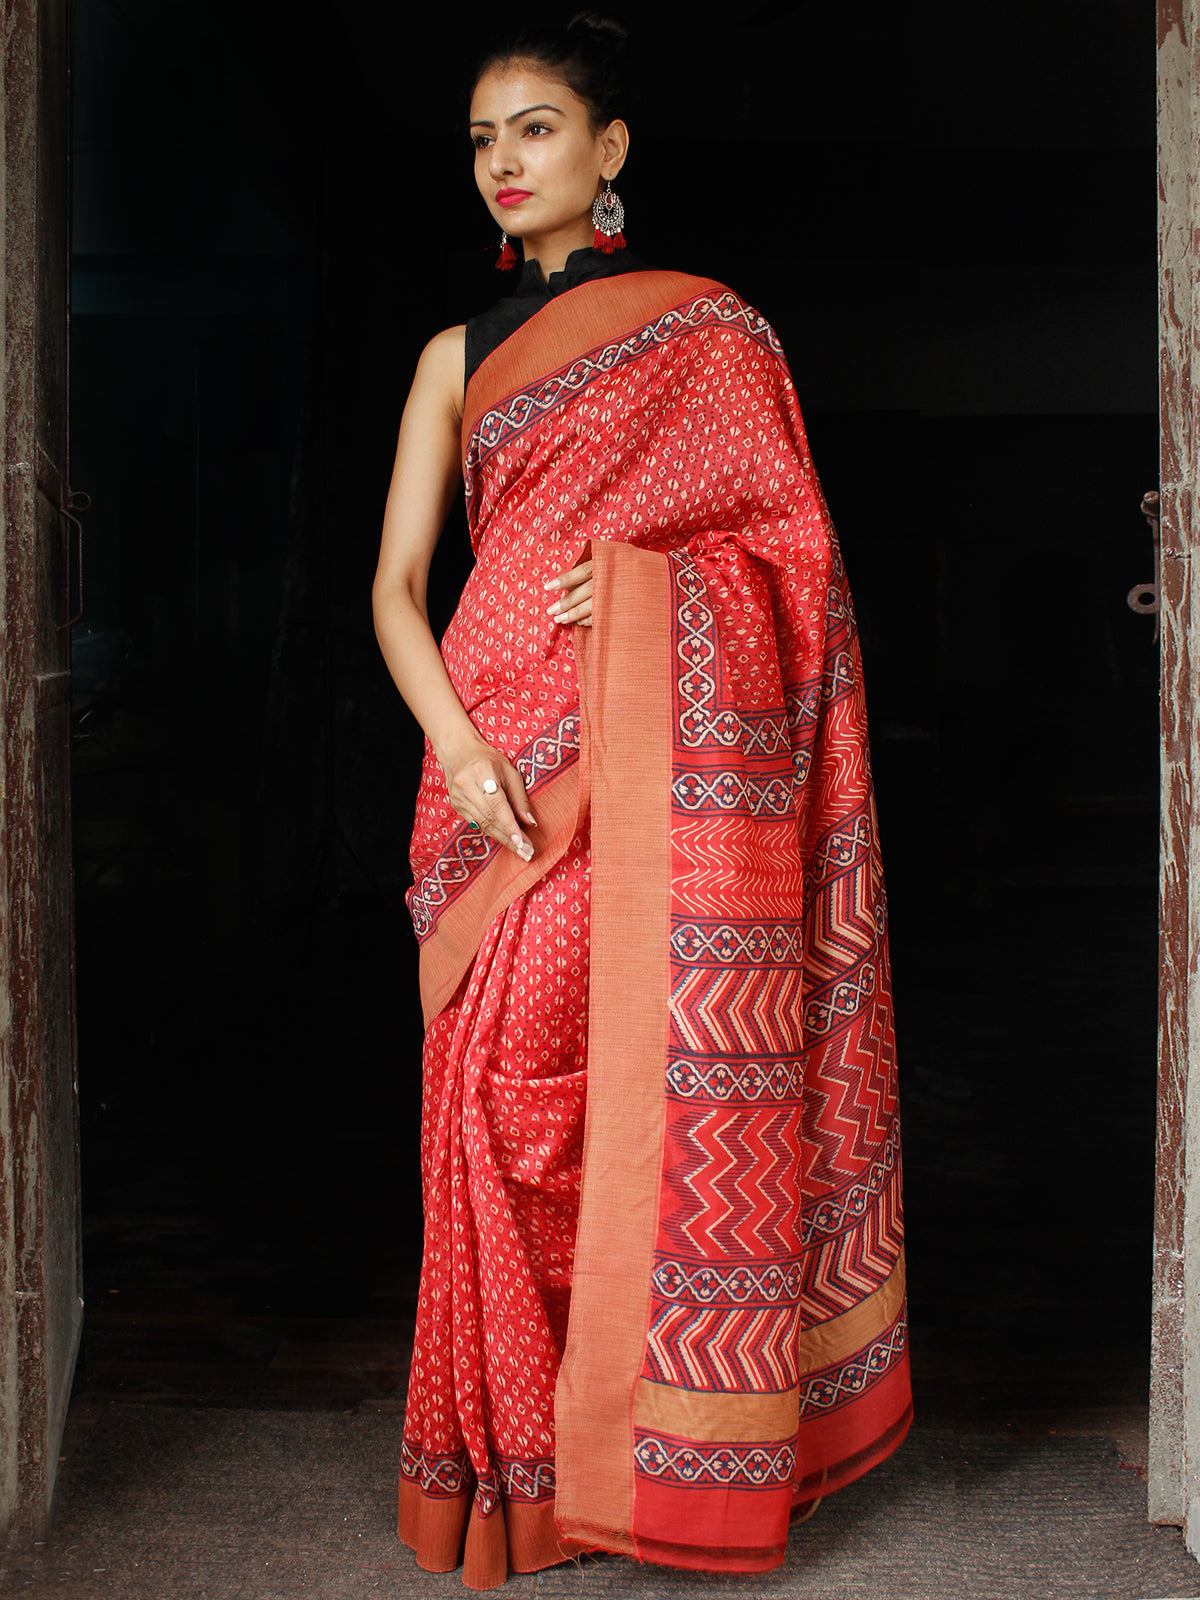 Red Ivory Black Chanderi Silk Hand Block Printed Saree With Geecha Border - S031703613